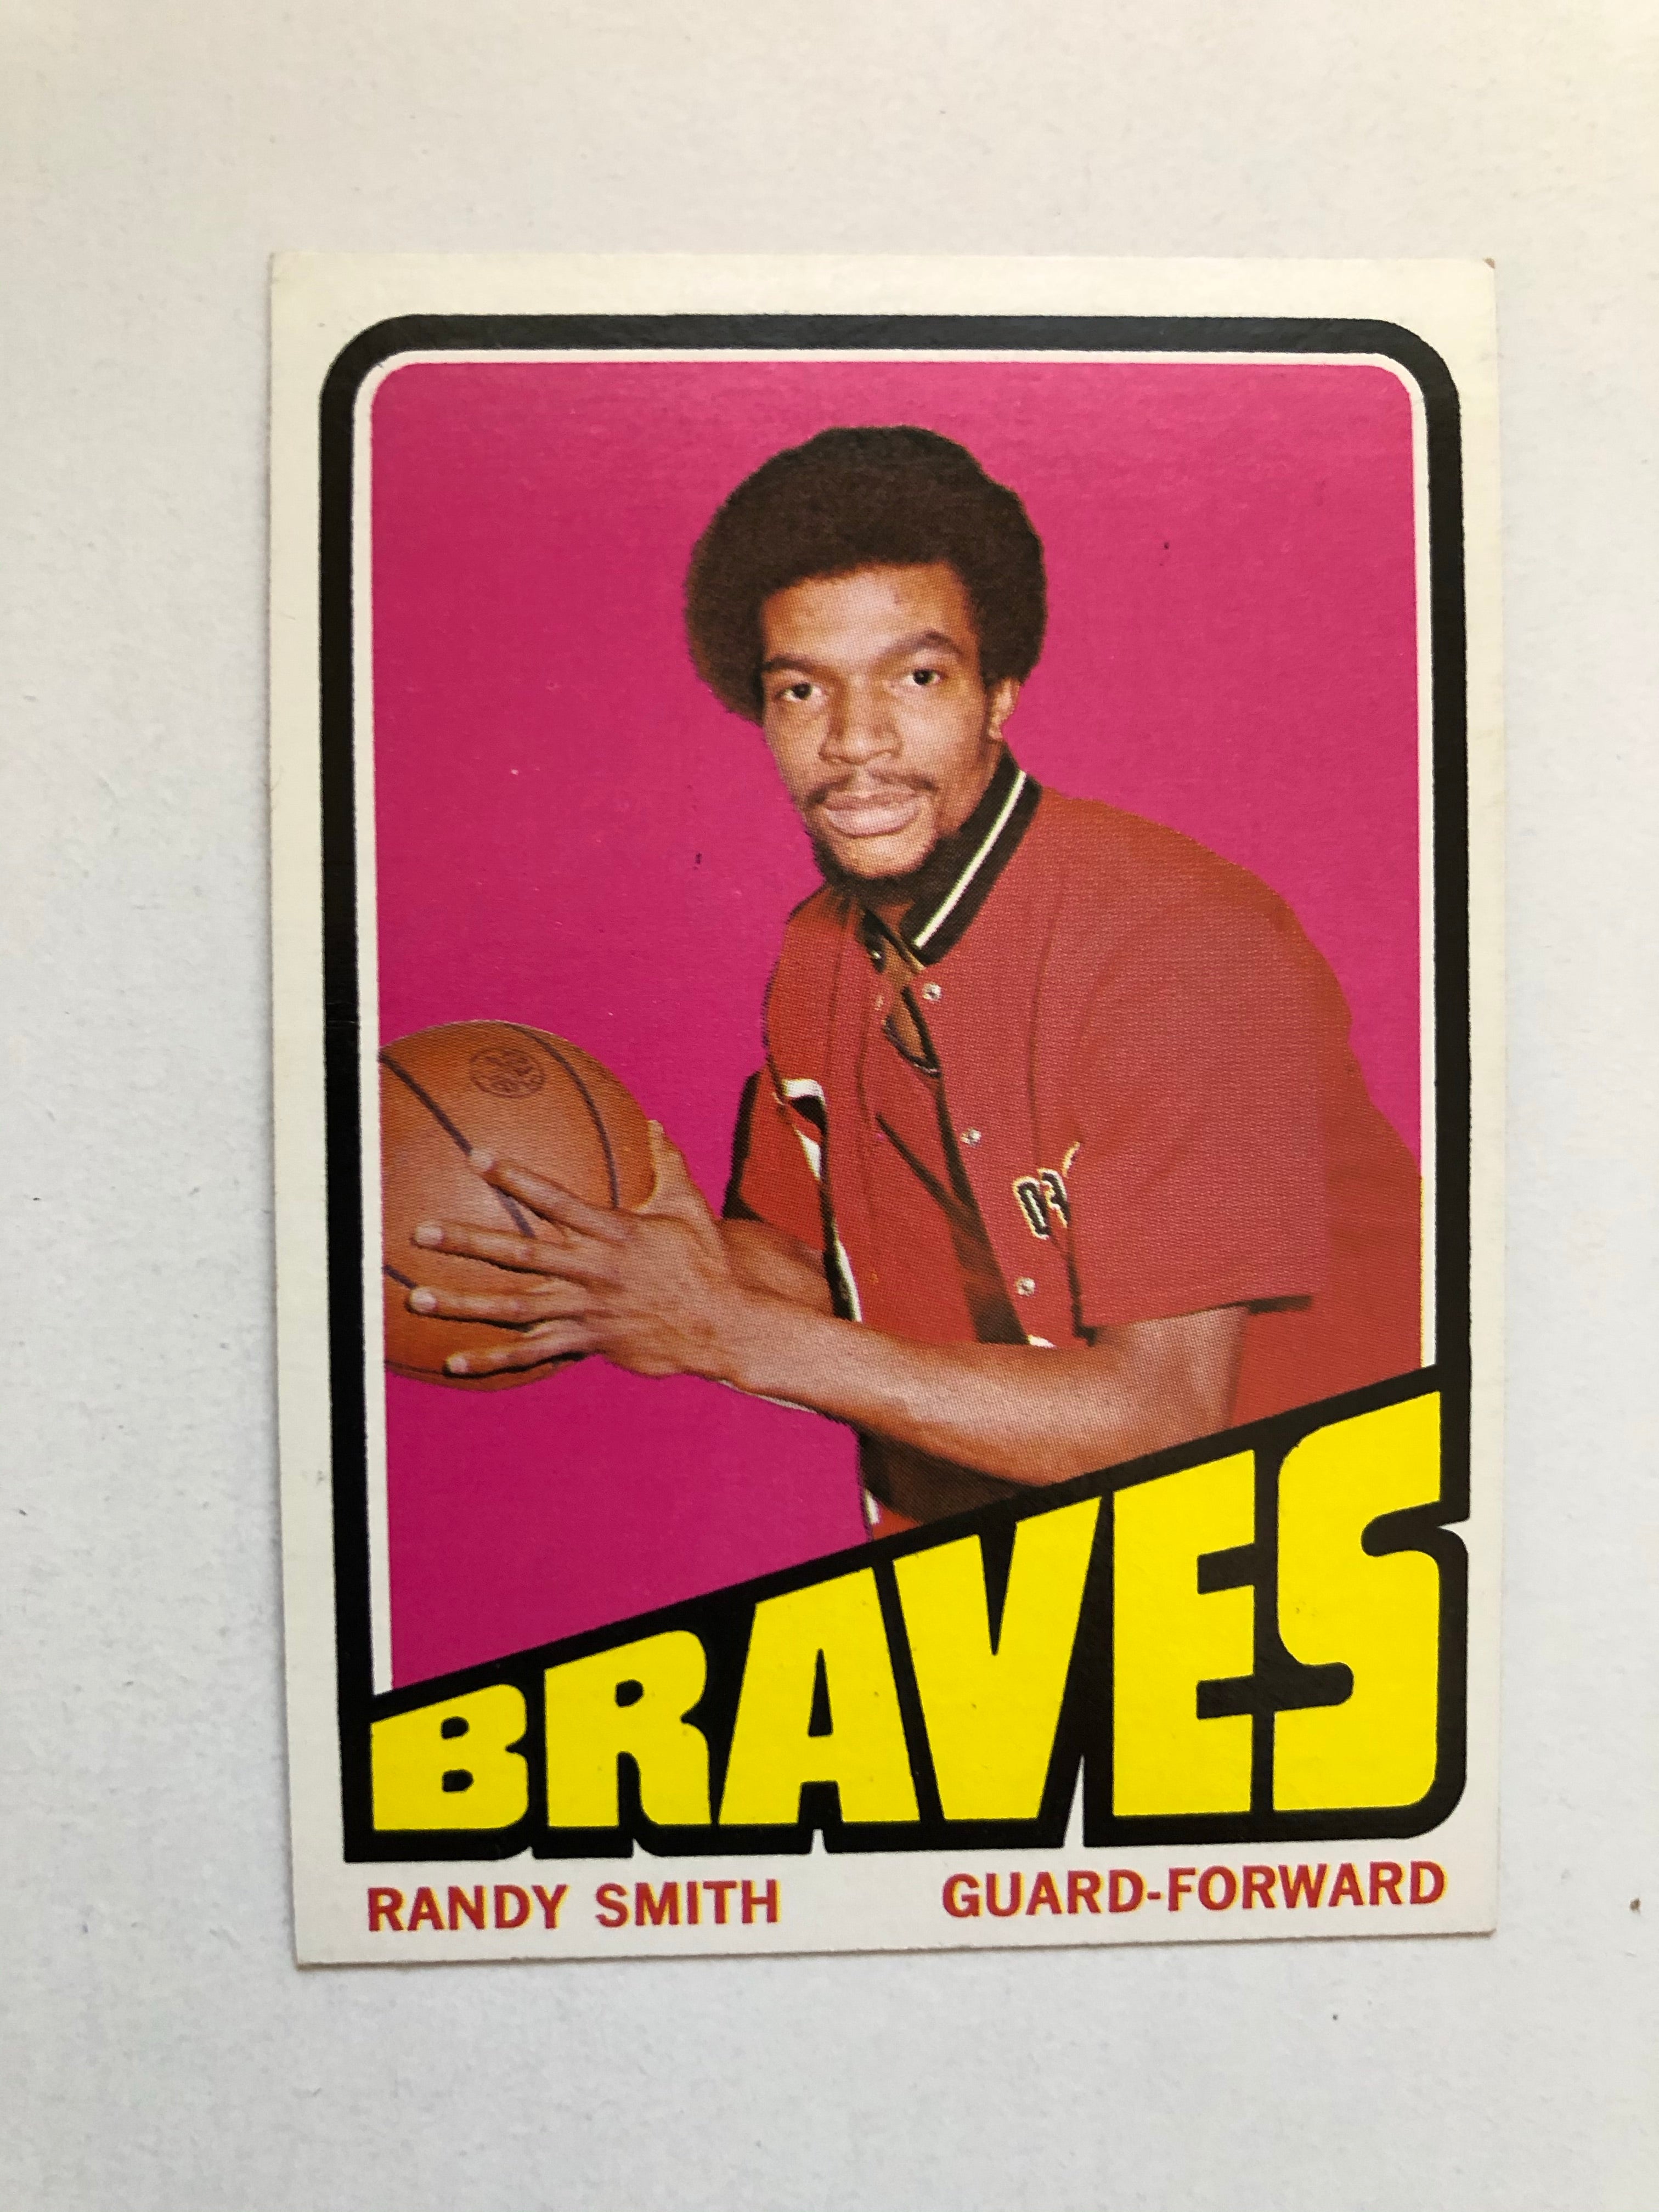 1972 Topps Randy Smith high grade basketball rookie card